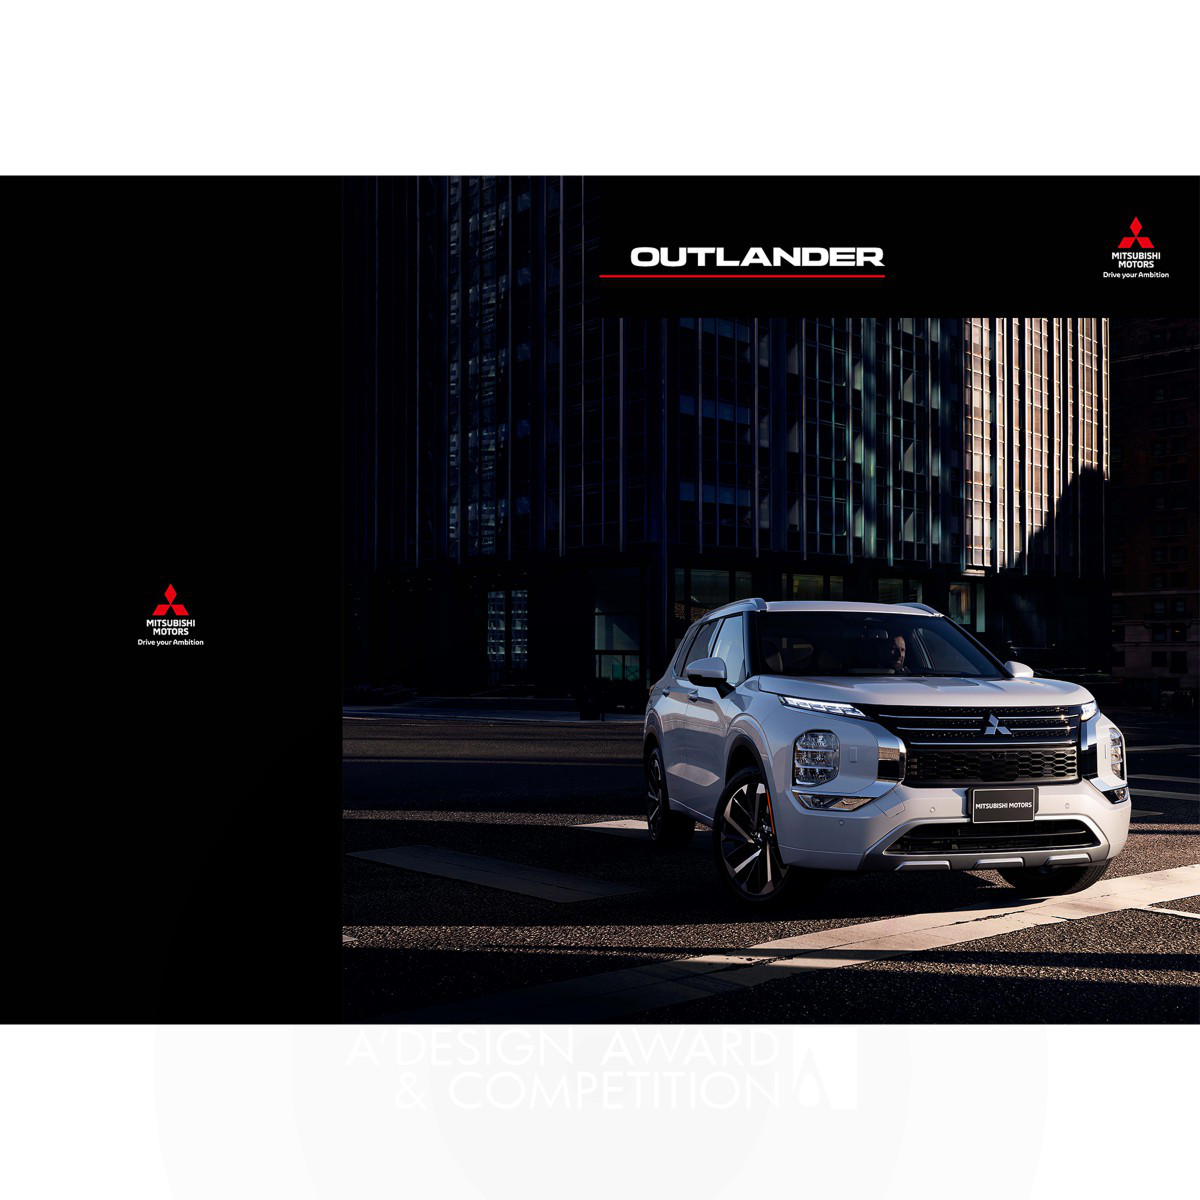 Mitsubishi Motors Outlander <b>Brochures of Car Products and Functions